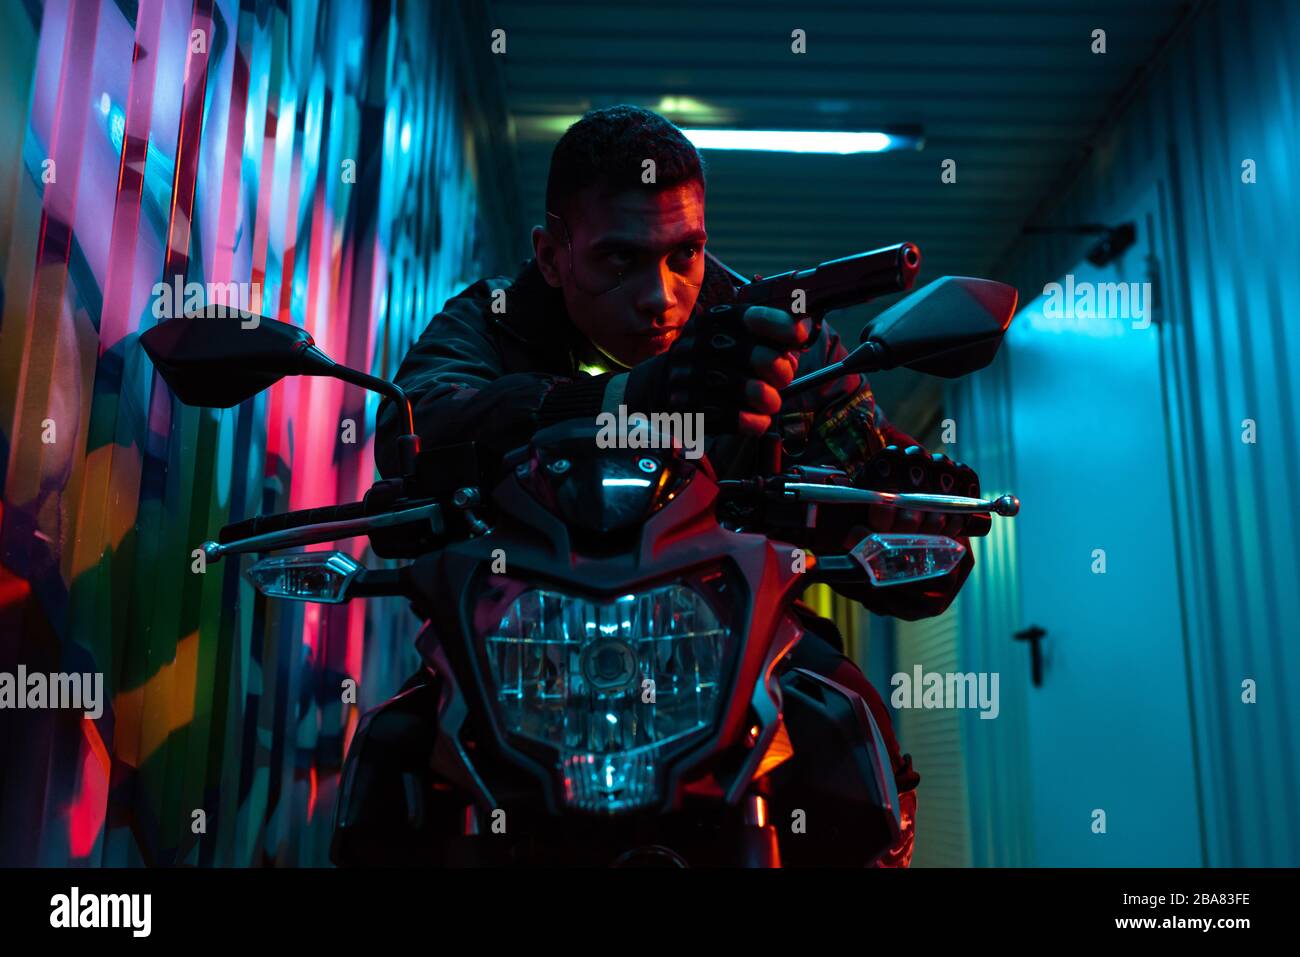 bi-racial cyberpunk player on motorcycle aiming gun on street with graffiti Stock Photo